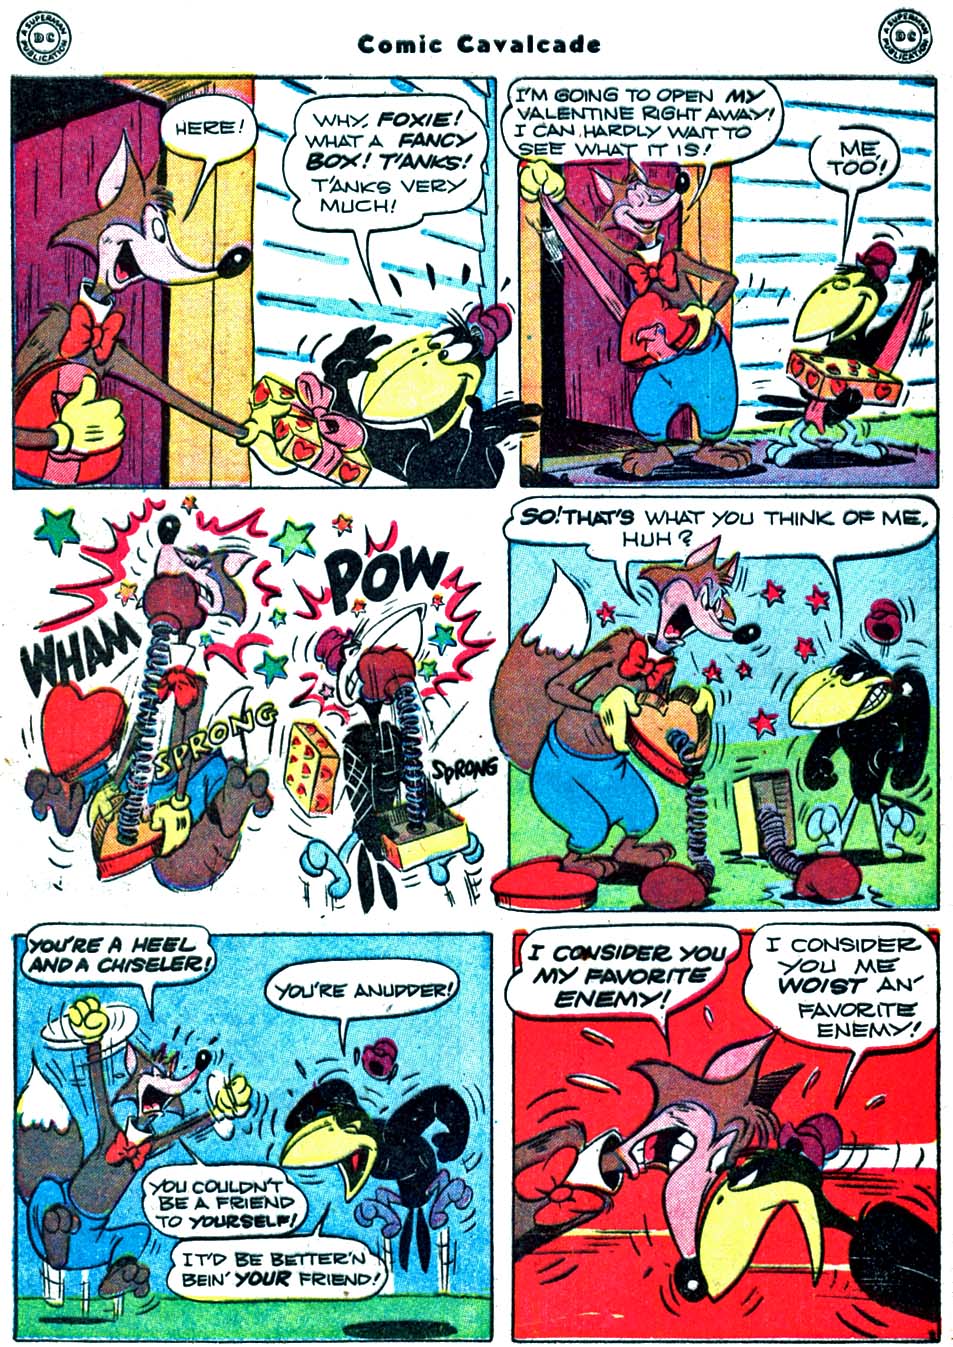 Comic Cavalcade issue 32 - Page 4